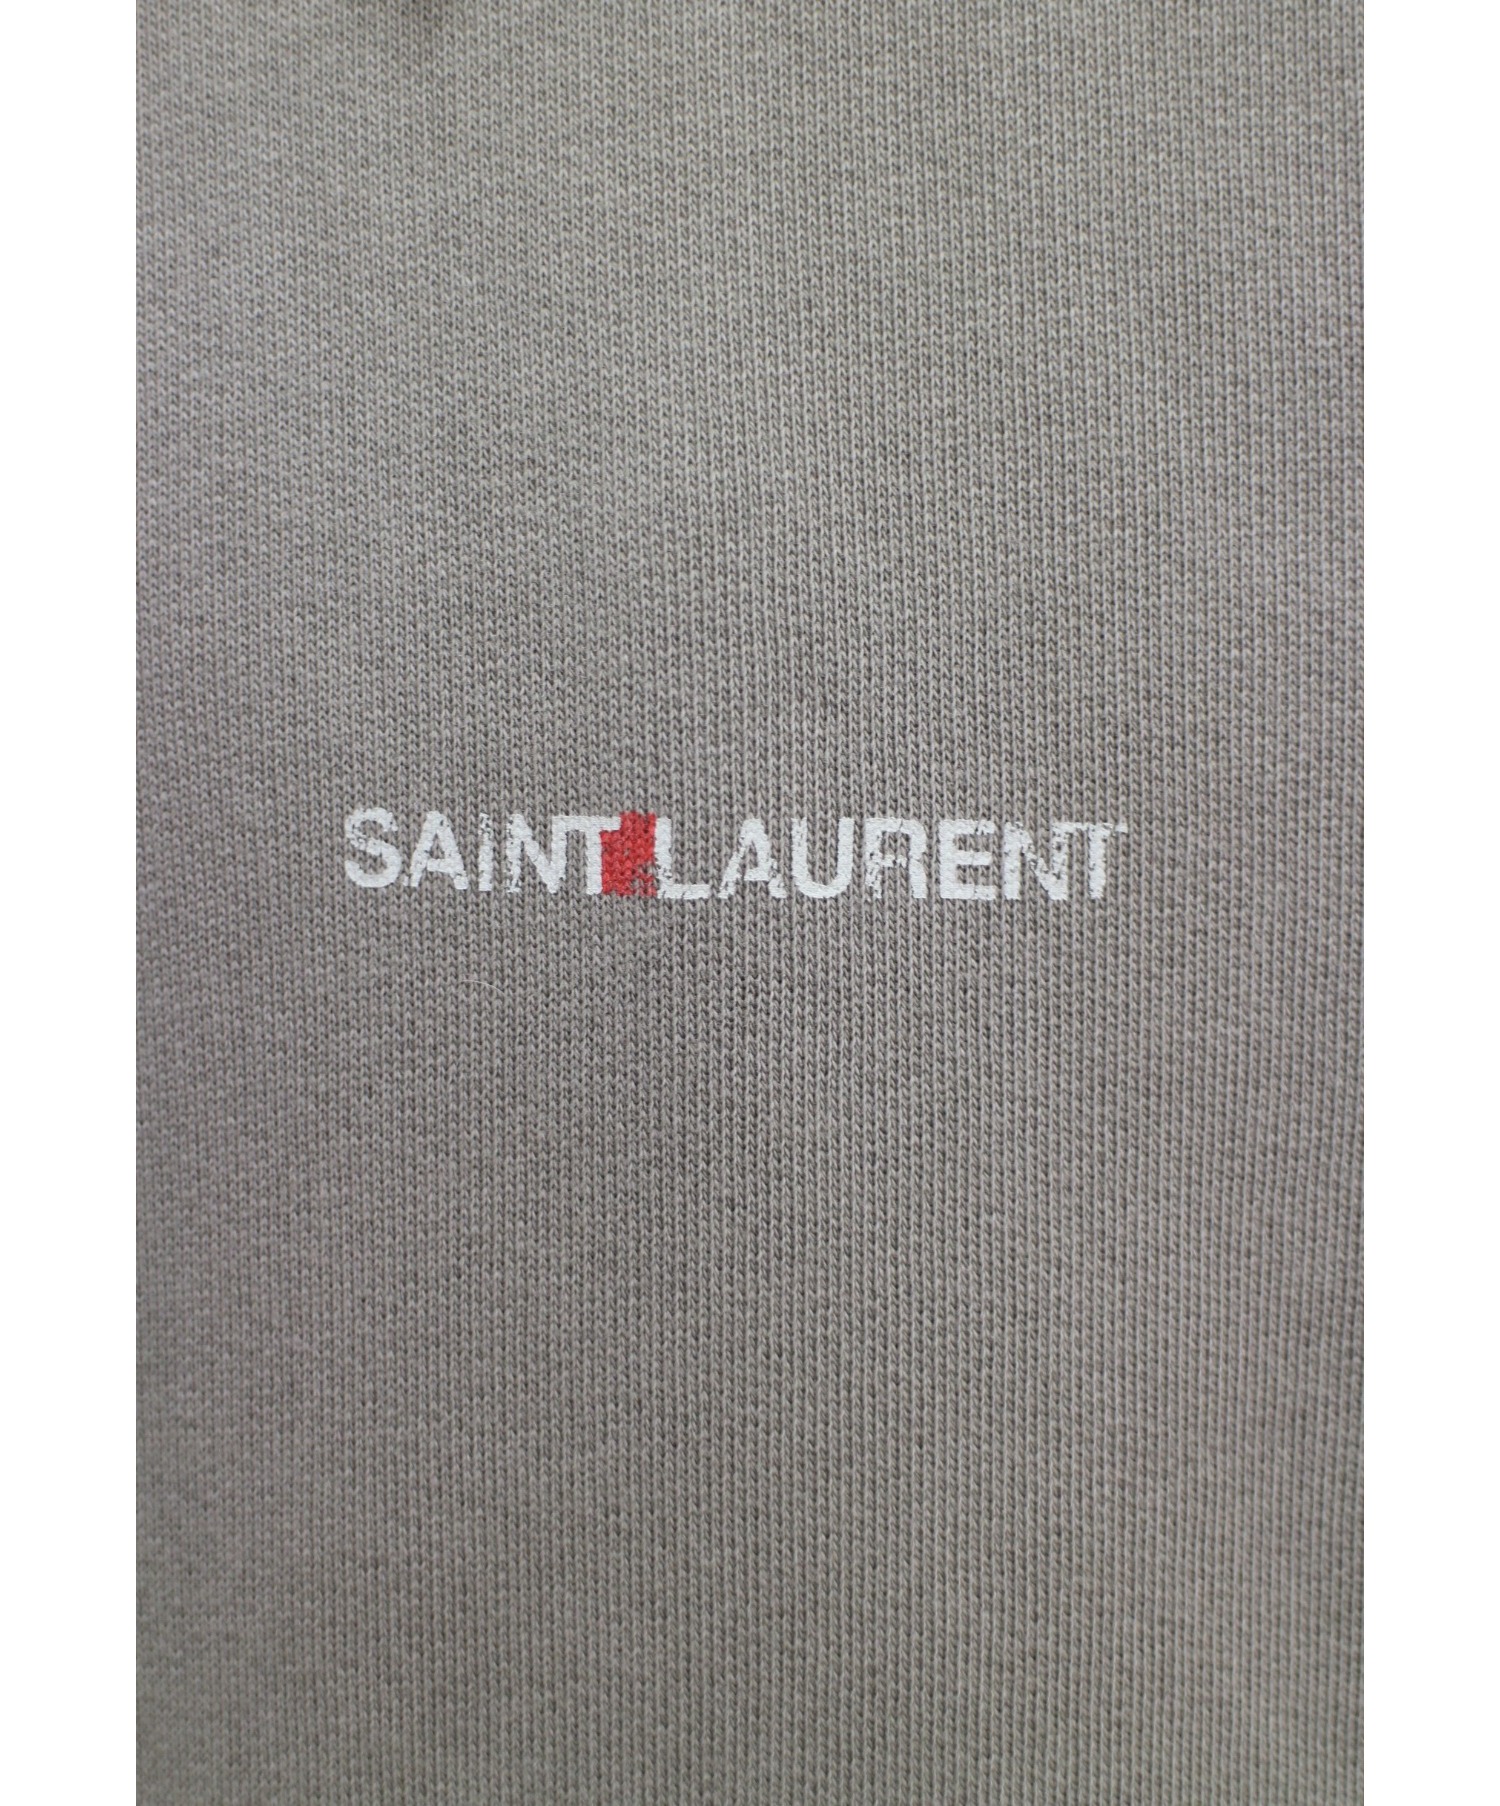 Saint Laurent Paris (サンローランパリ) ダメージ加工プルオーバーパーカー カーキ サイズ:XS